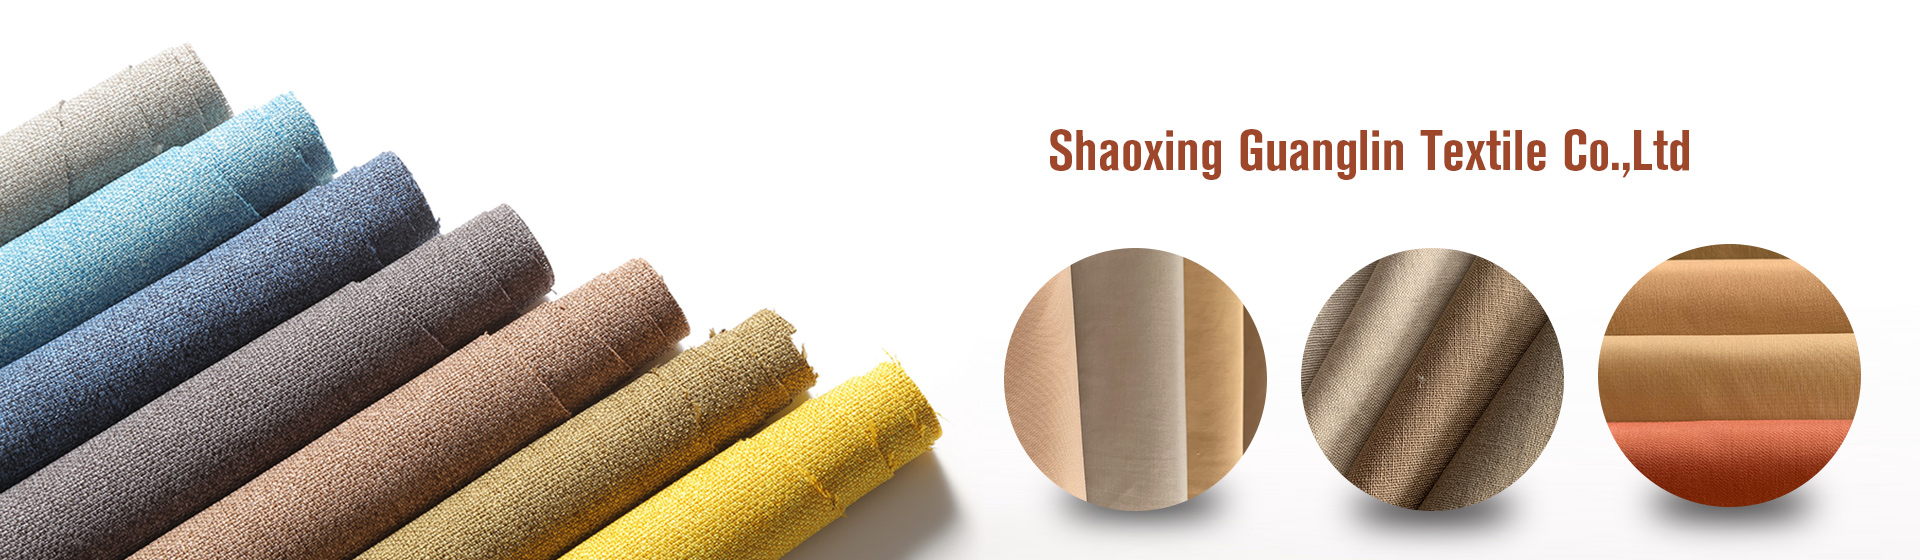 Shaoxing Guanglin Textile Co.,Ltd